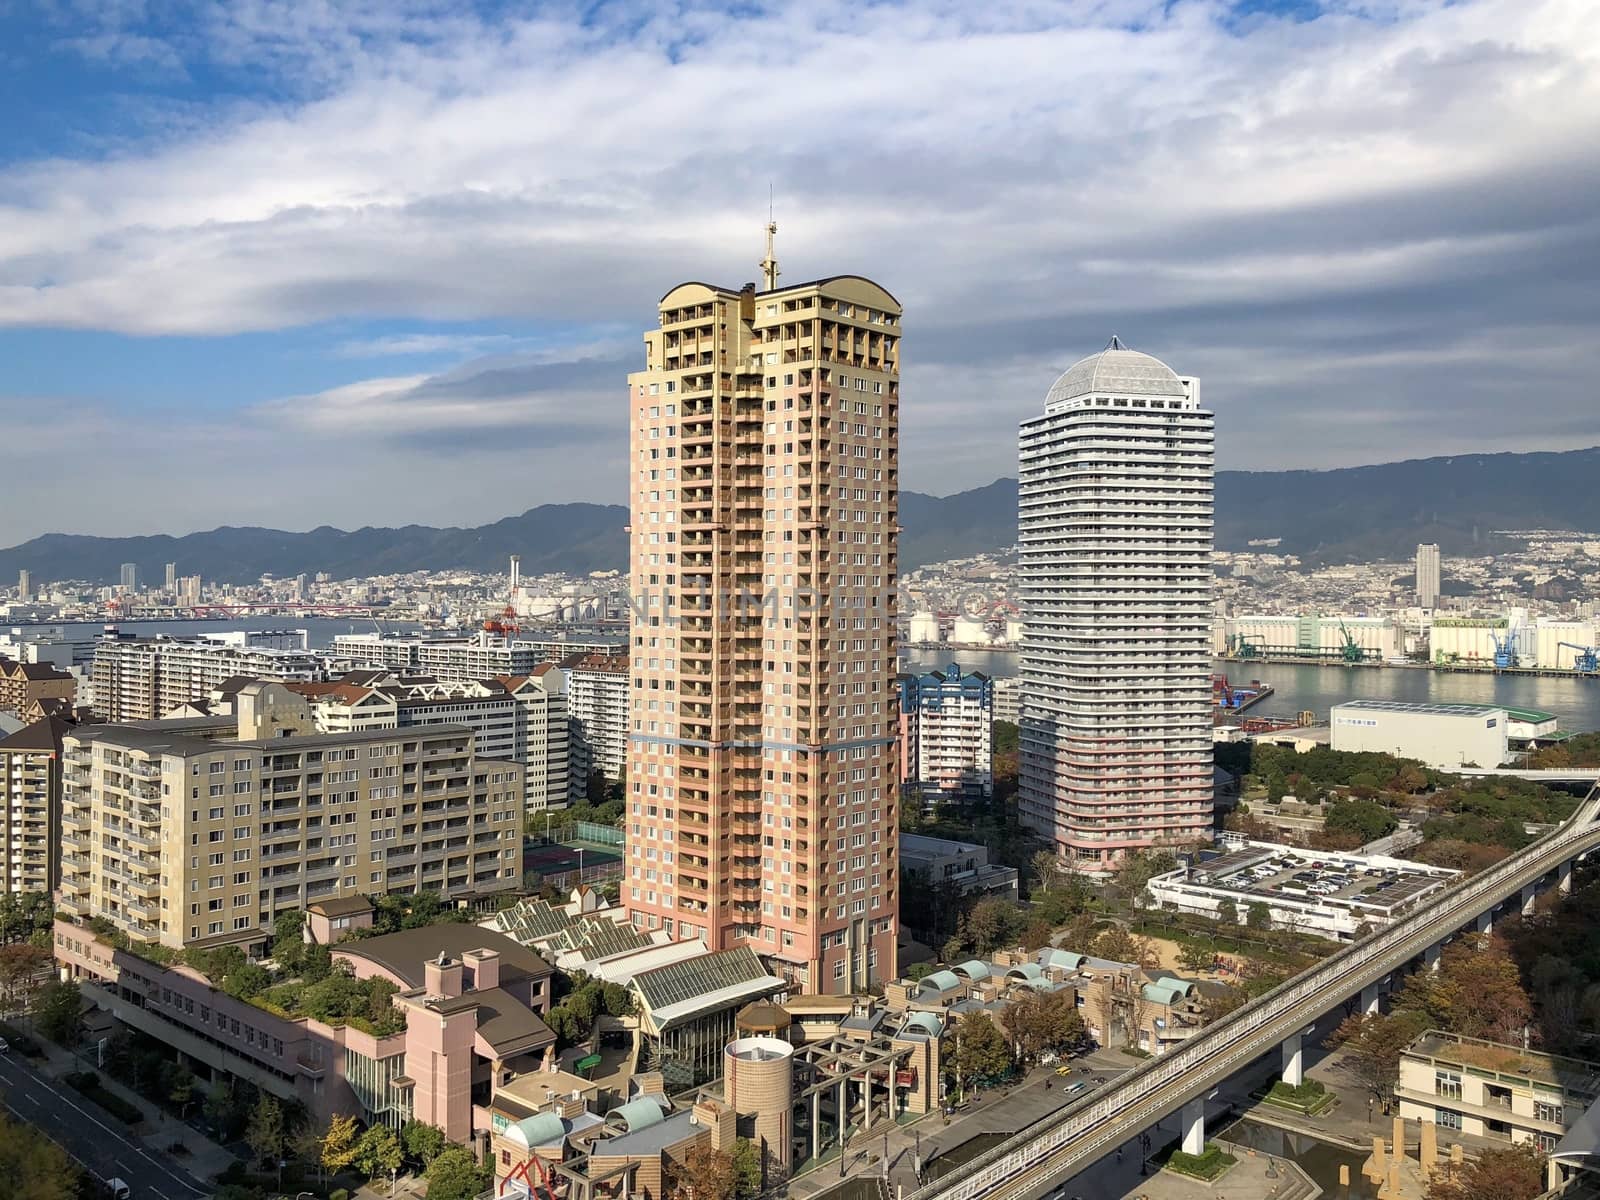 Aerial view of Kobe city, Japan. by blueandrew8000@hotmail.com